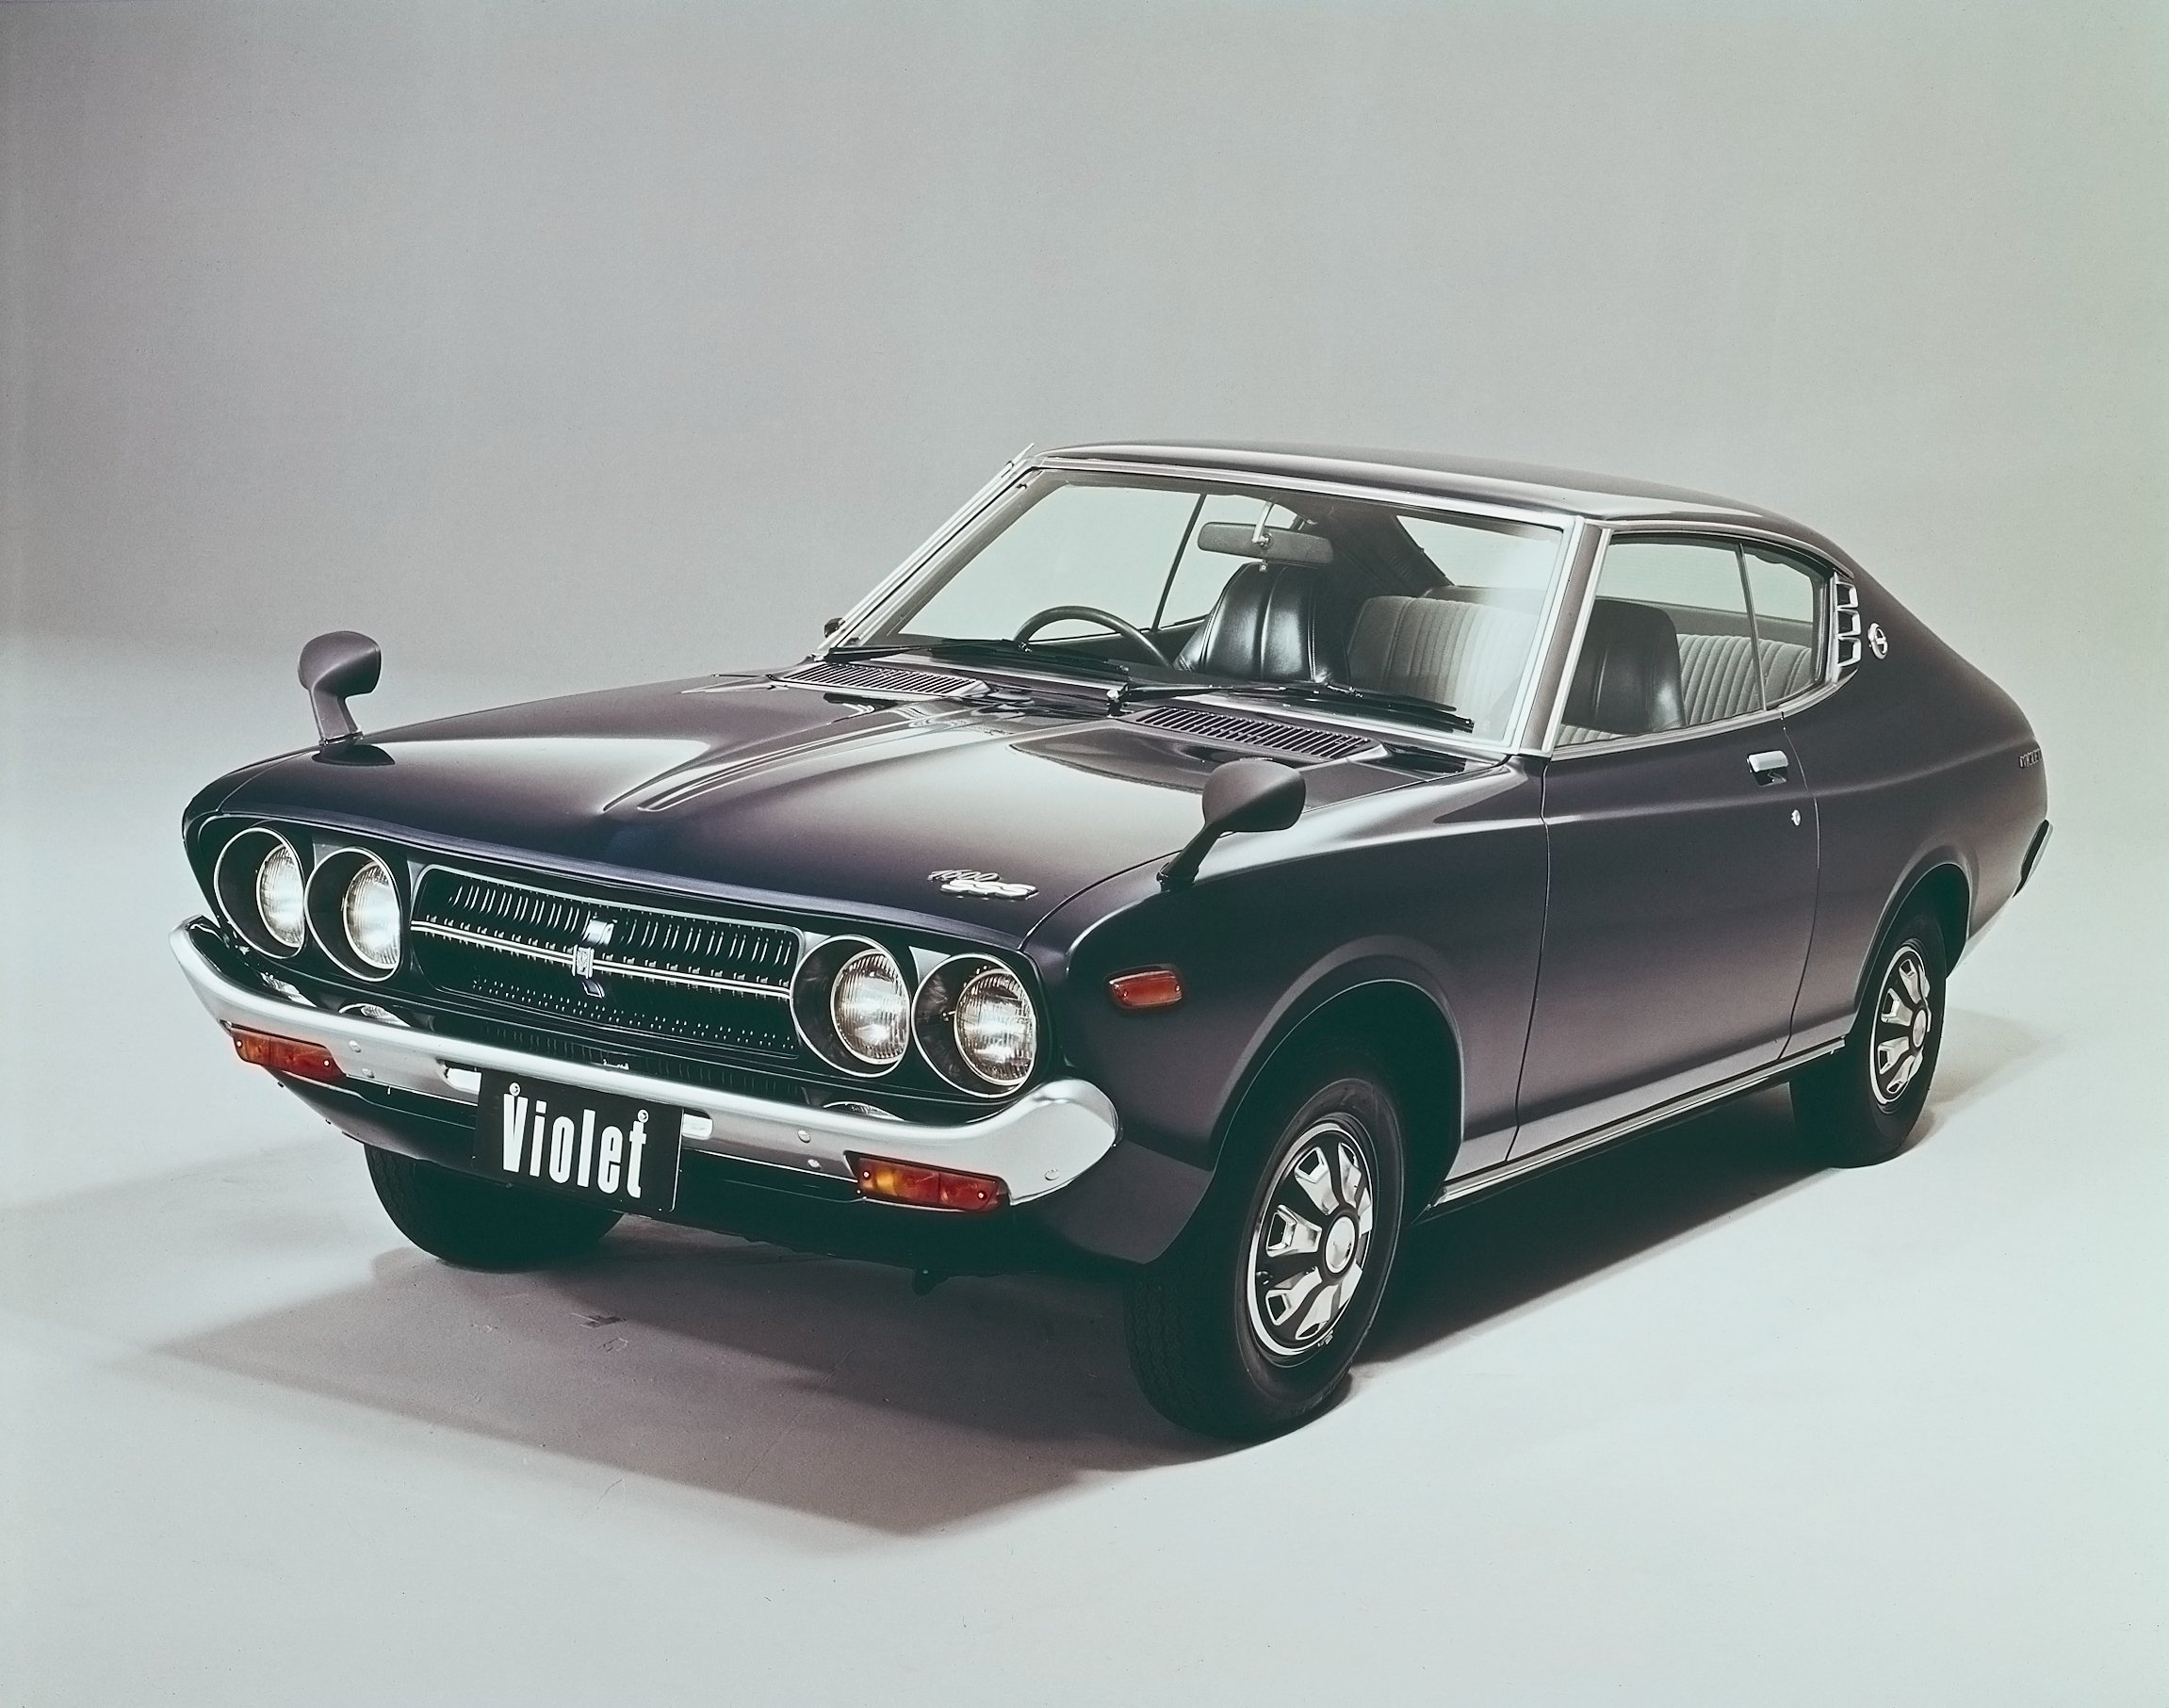 1973 77, Nissan, Violet, Sss, Coupe,  710 , Datsun Wallpaper